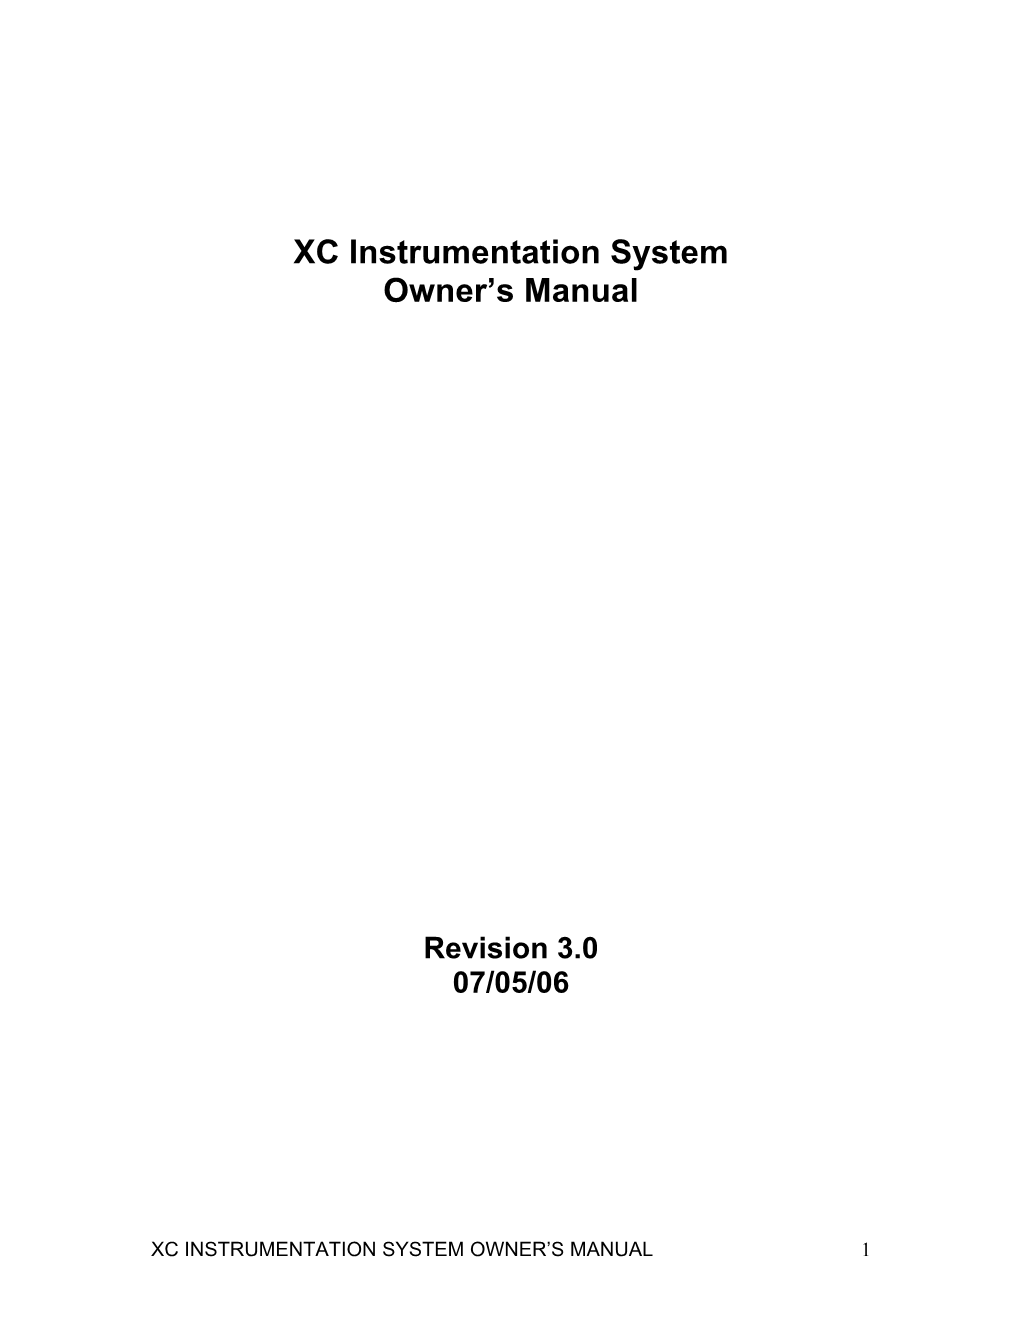 FCCC XC Instrumentation System Owner's Manual Rev